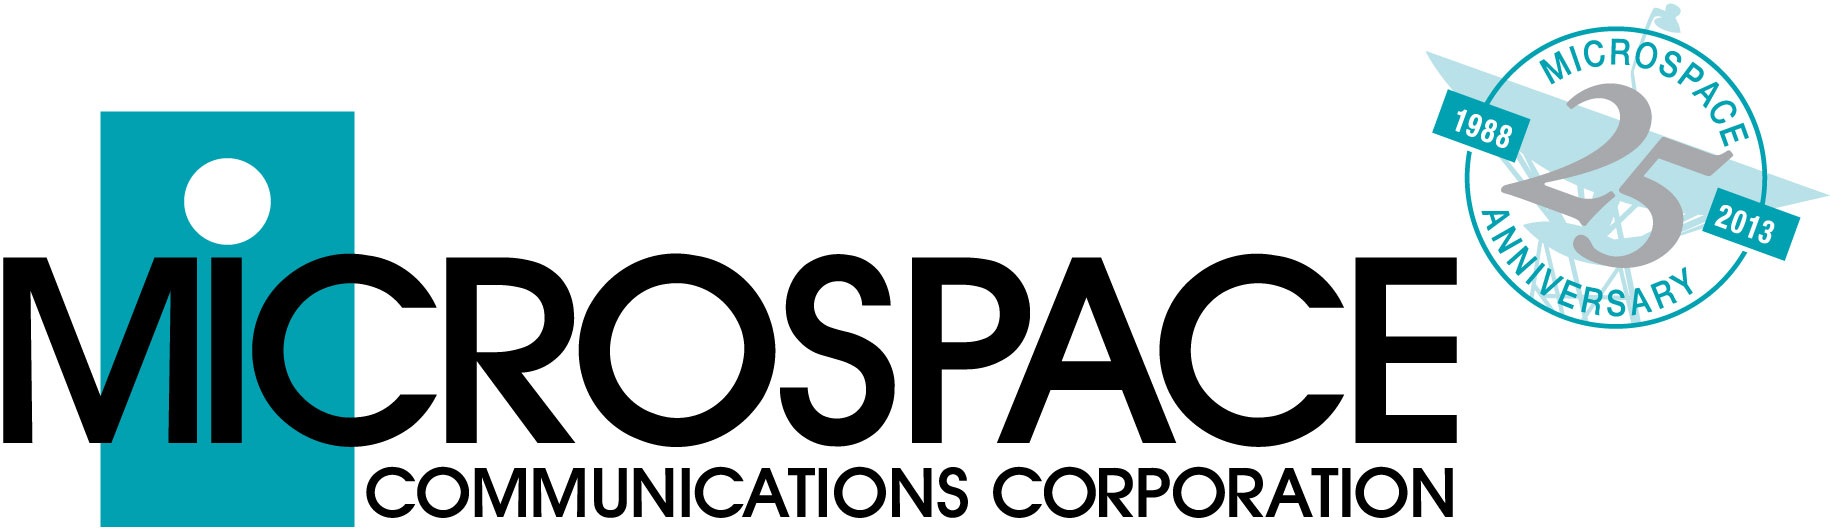 Microspace Communications logo'